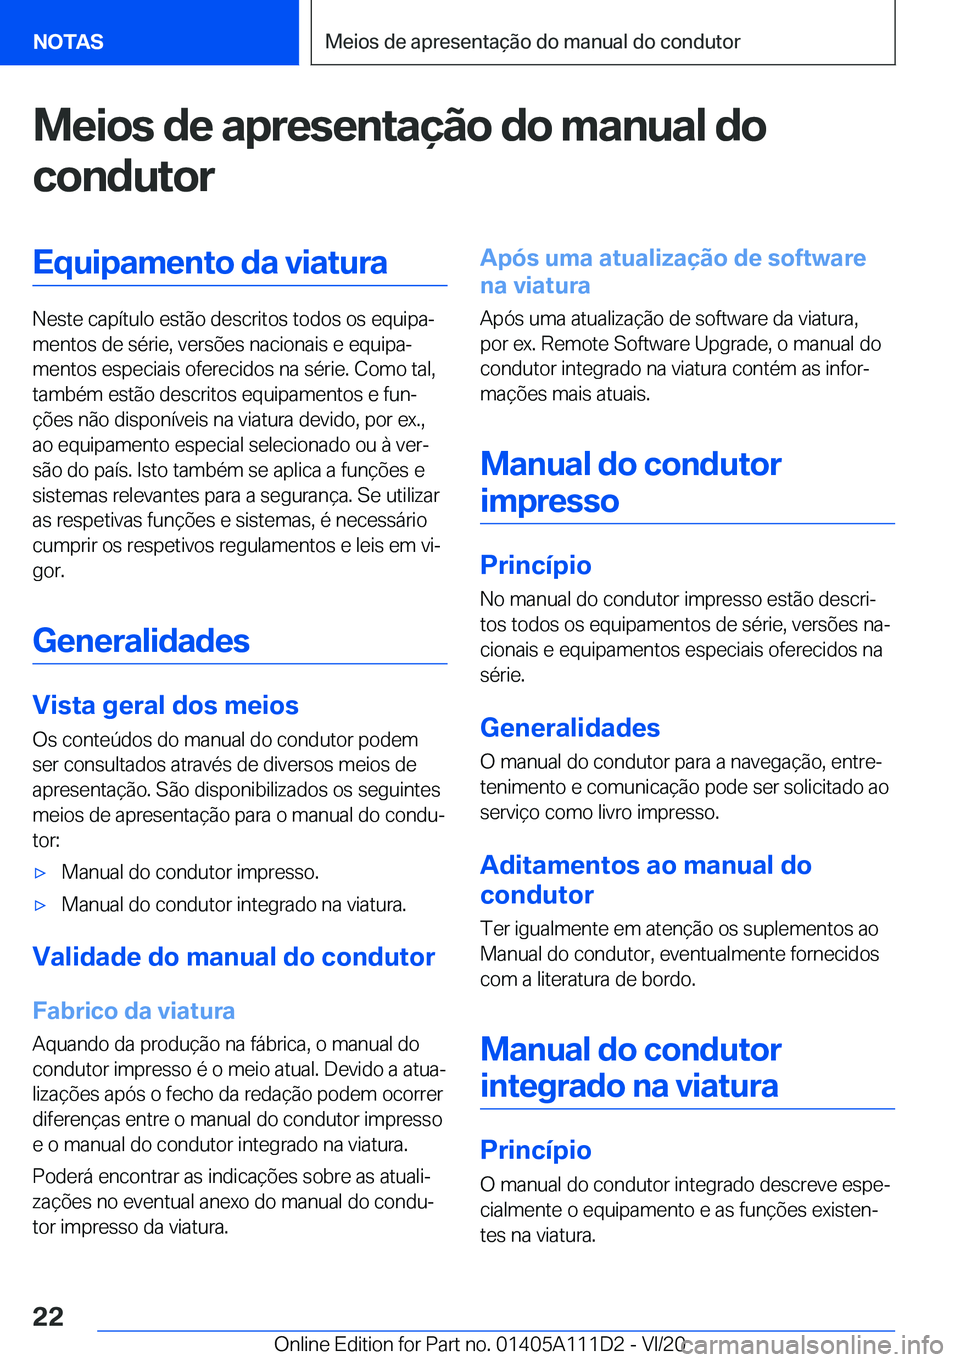 BMW 3 SERIES SEDAN PLUG-IN HYBRID 2021  Manual do condutor (in Portuguese) �M�e�i�o�s��d�e��a�p�r�e�s�e�n�t�a�